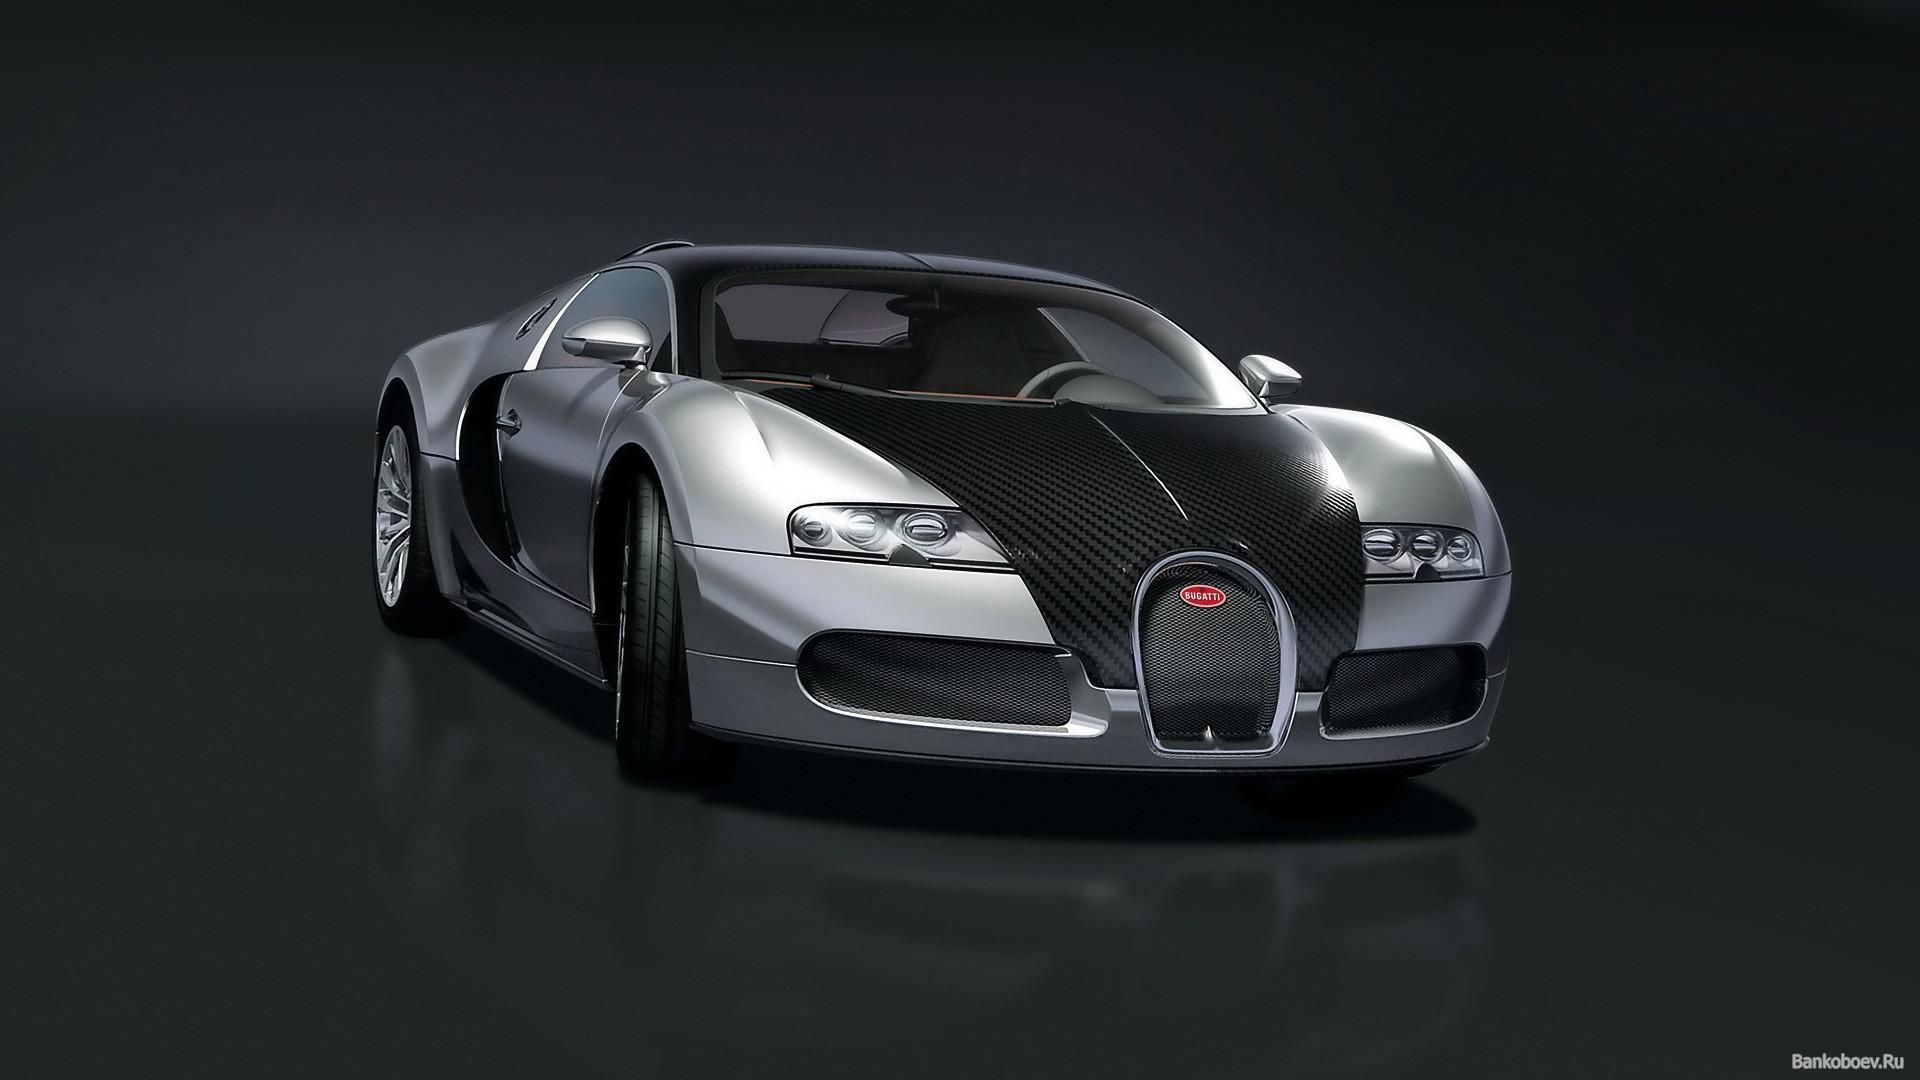 Hd Bugatti Veyron On A Black Background Wallpaper Download Free ...